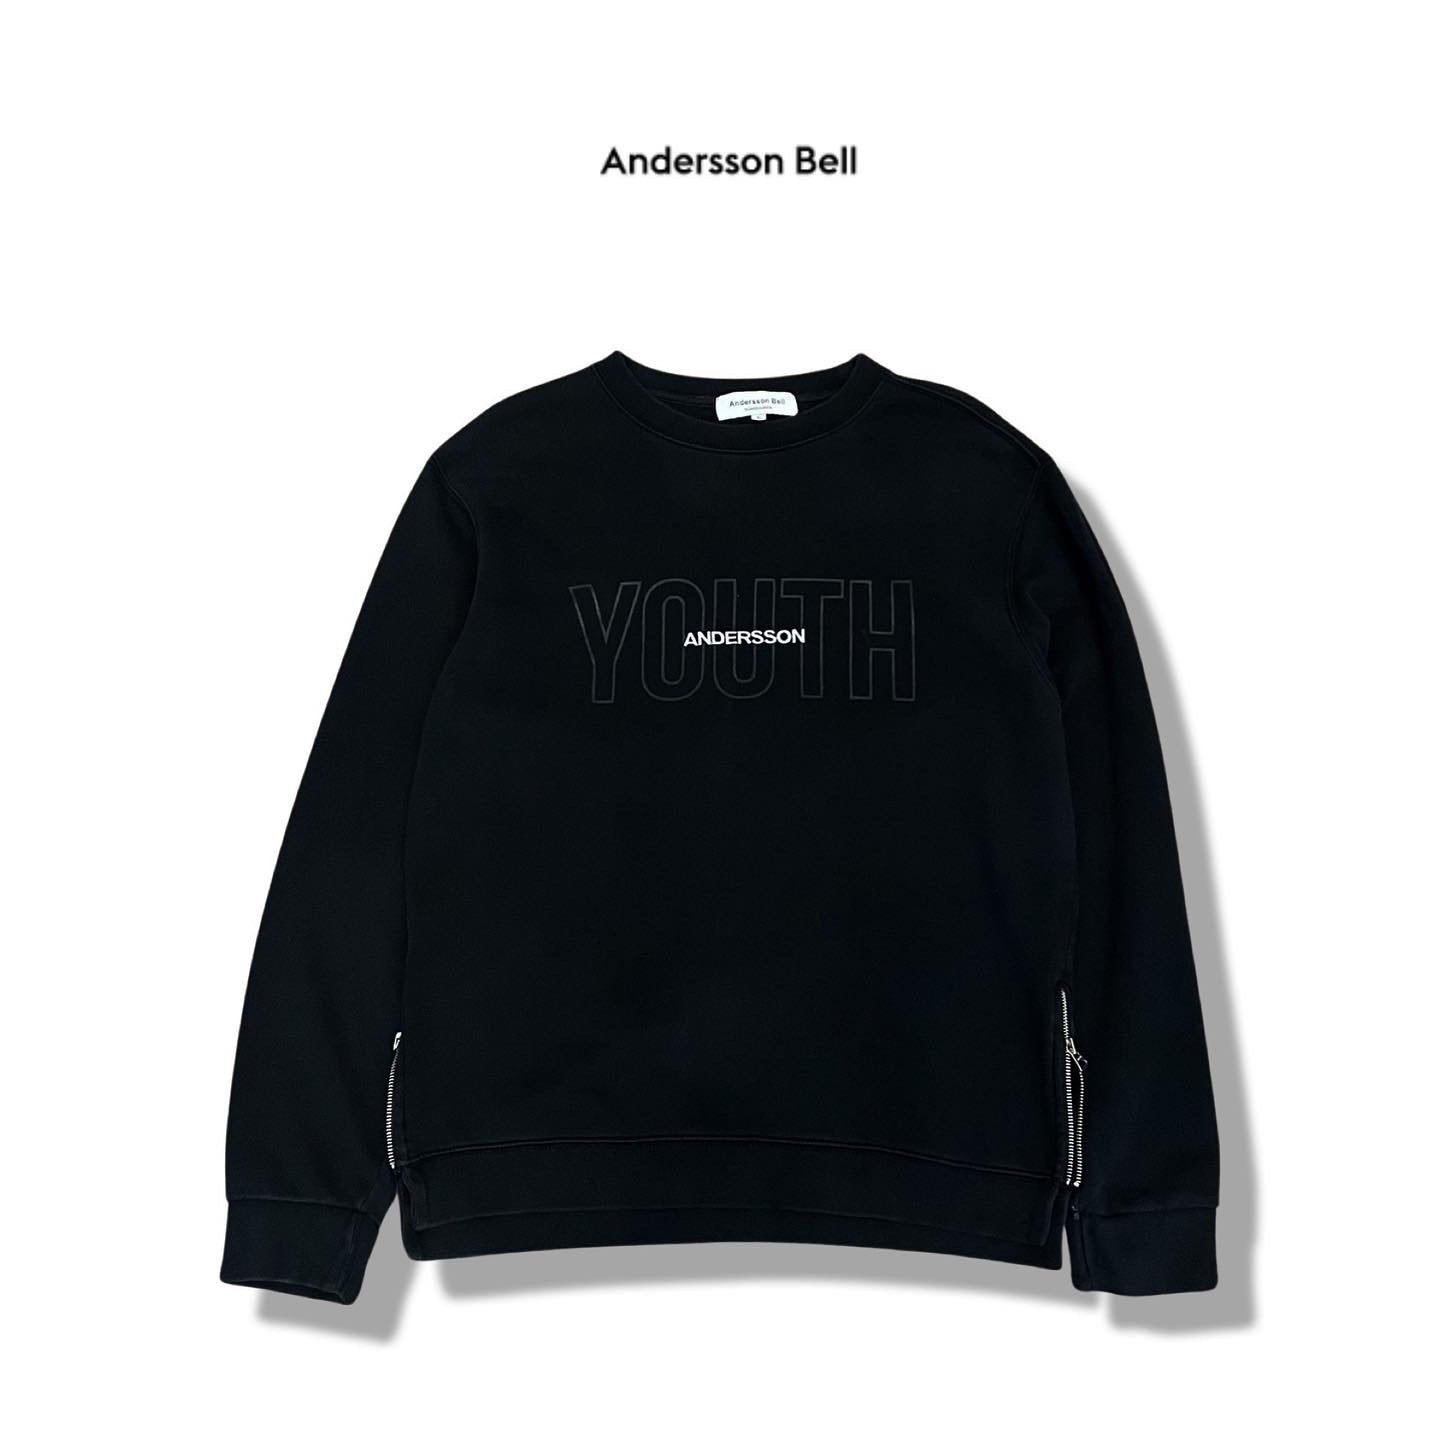 Andersson Bell sweatshirts